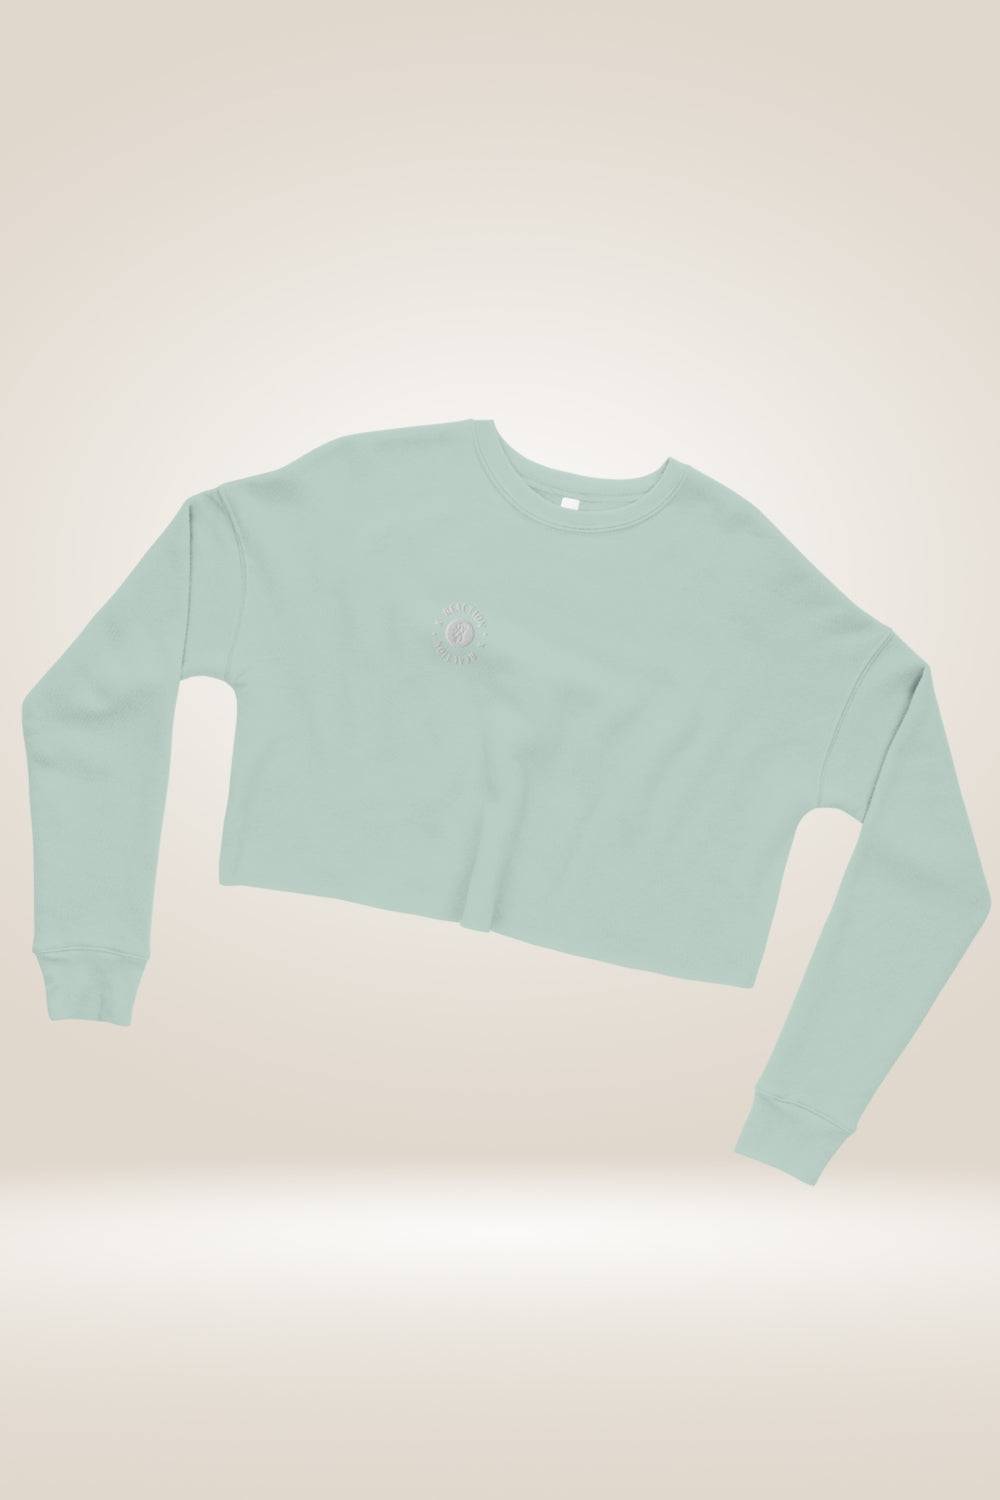 TGC X Reaction Light Blue Cropped Sweatshirt - TGC Boutique - Cropped Sweatshirt